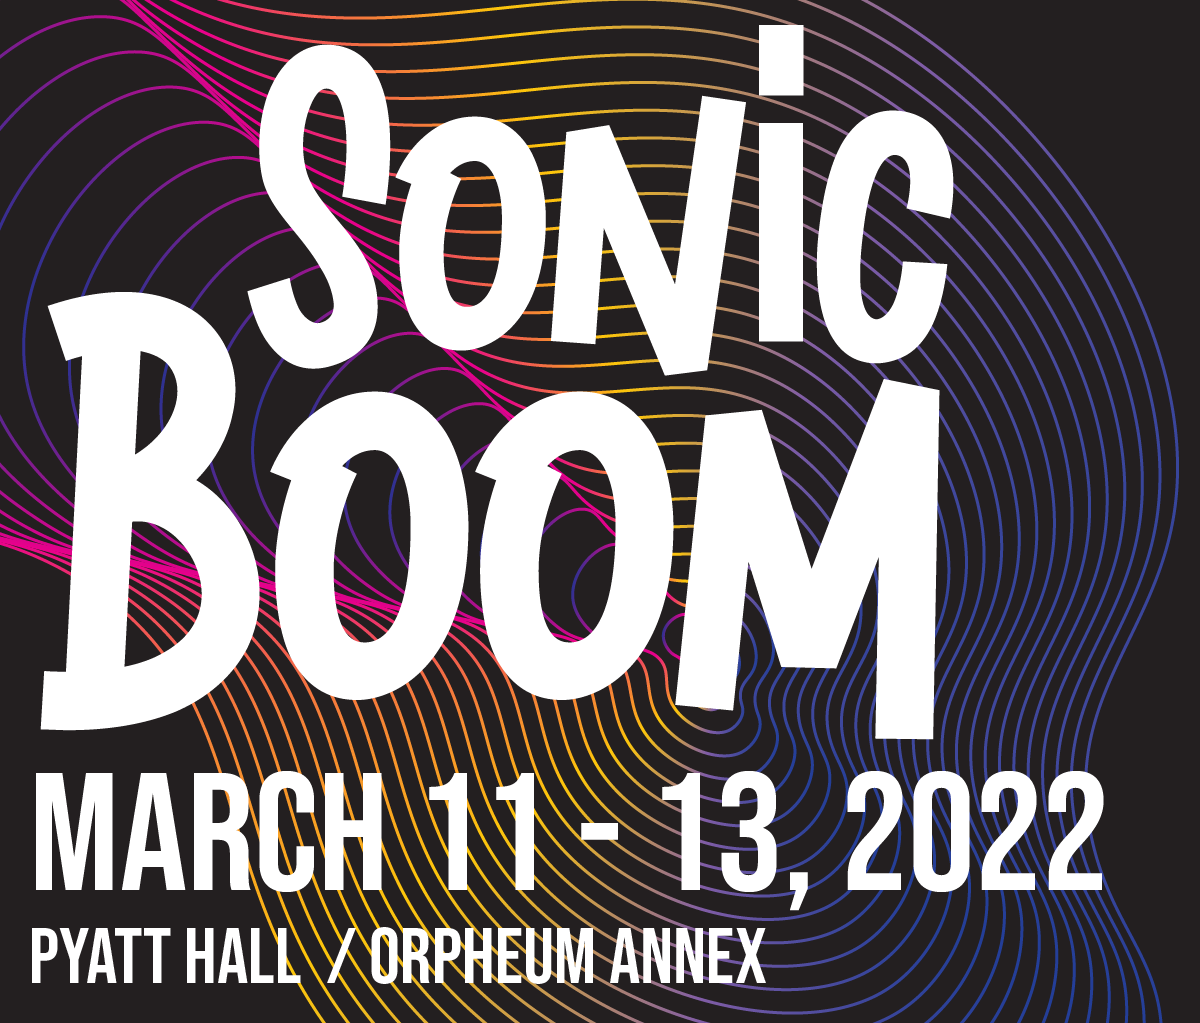 Sonic Boom 2022: March 11-13, 2022 - Vancouver Pro Musica